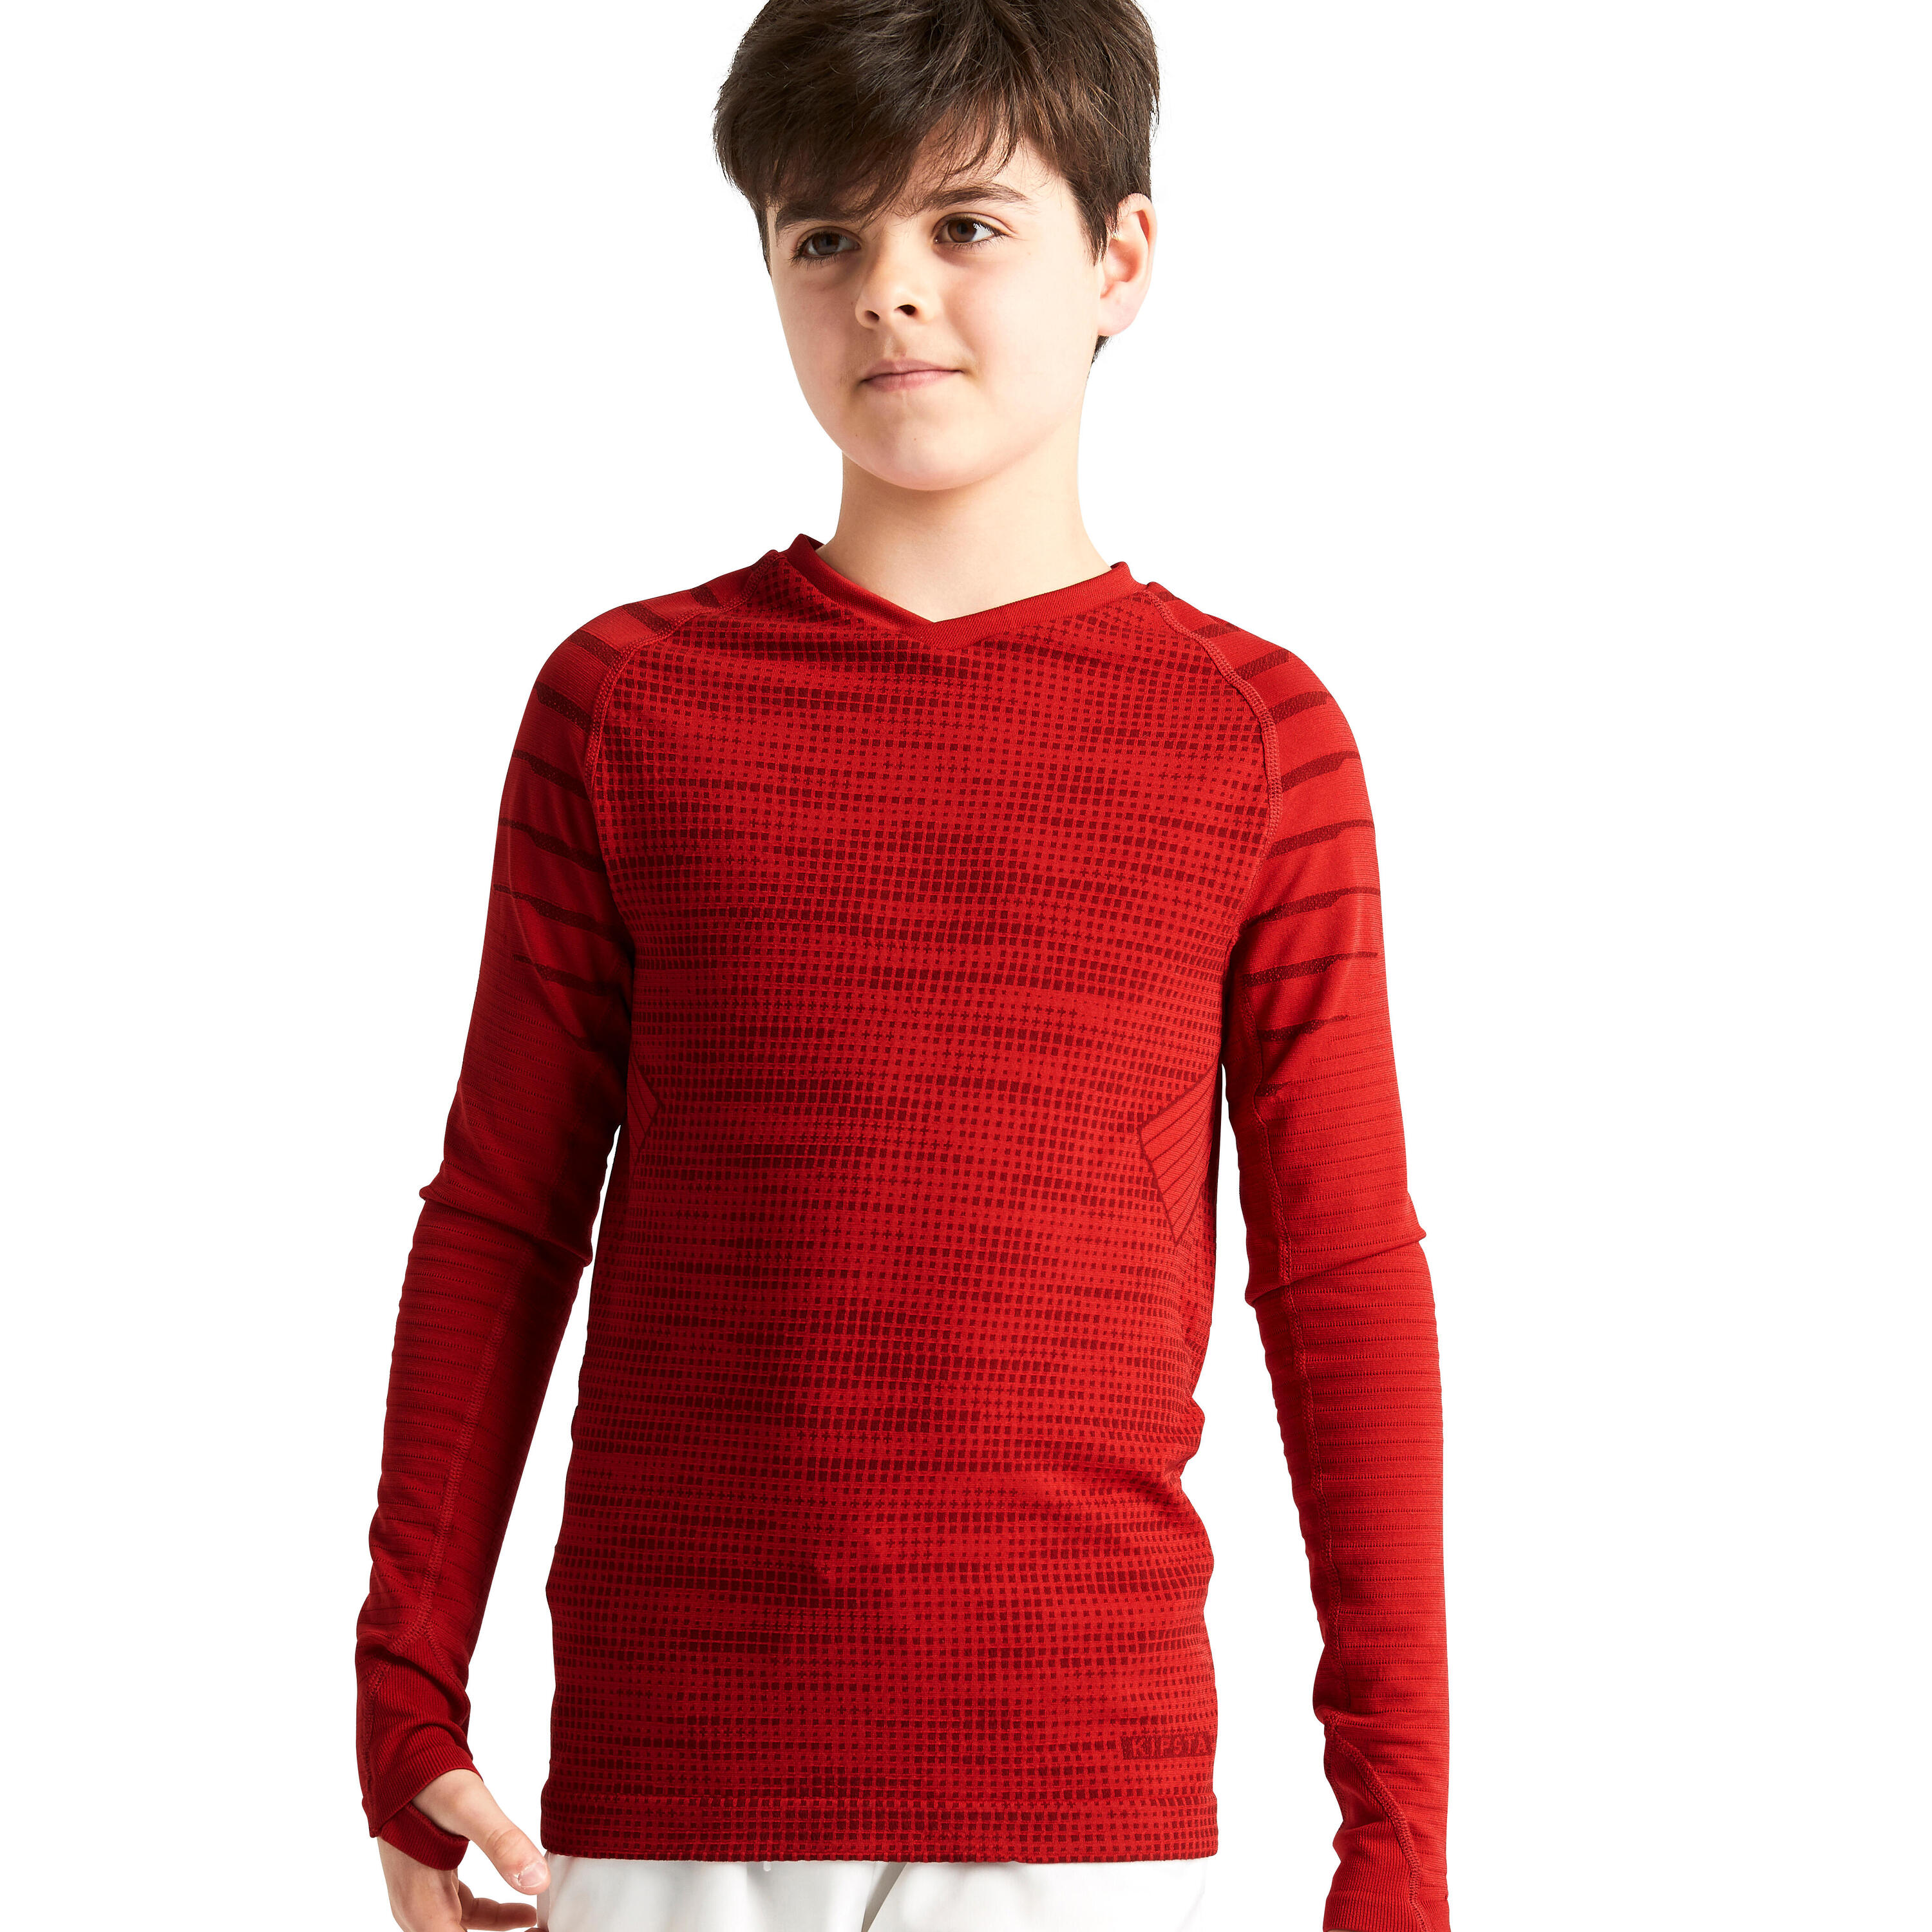 Kids' thermal long-sleeved football top, red 7/9